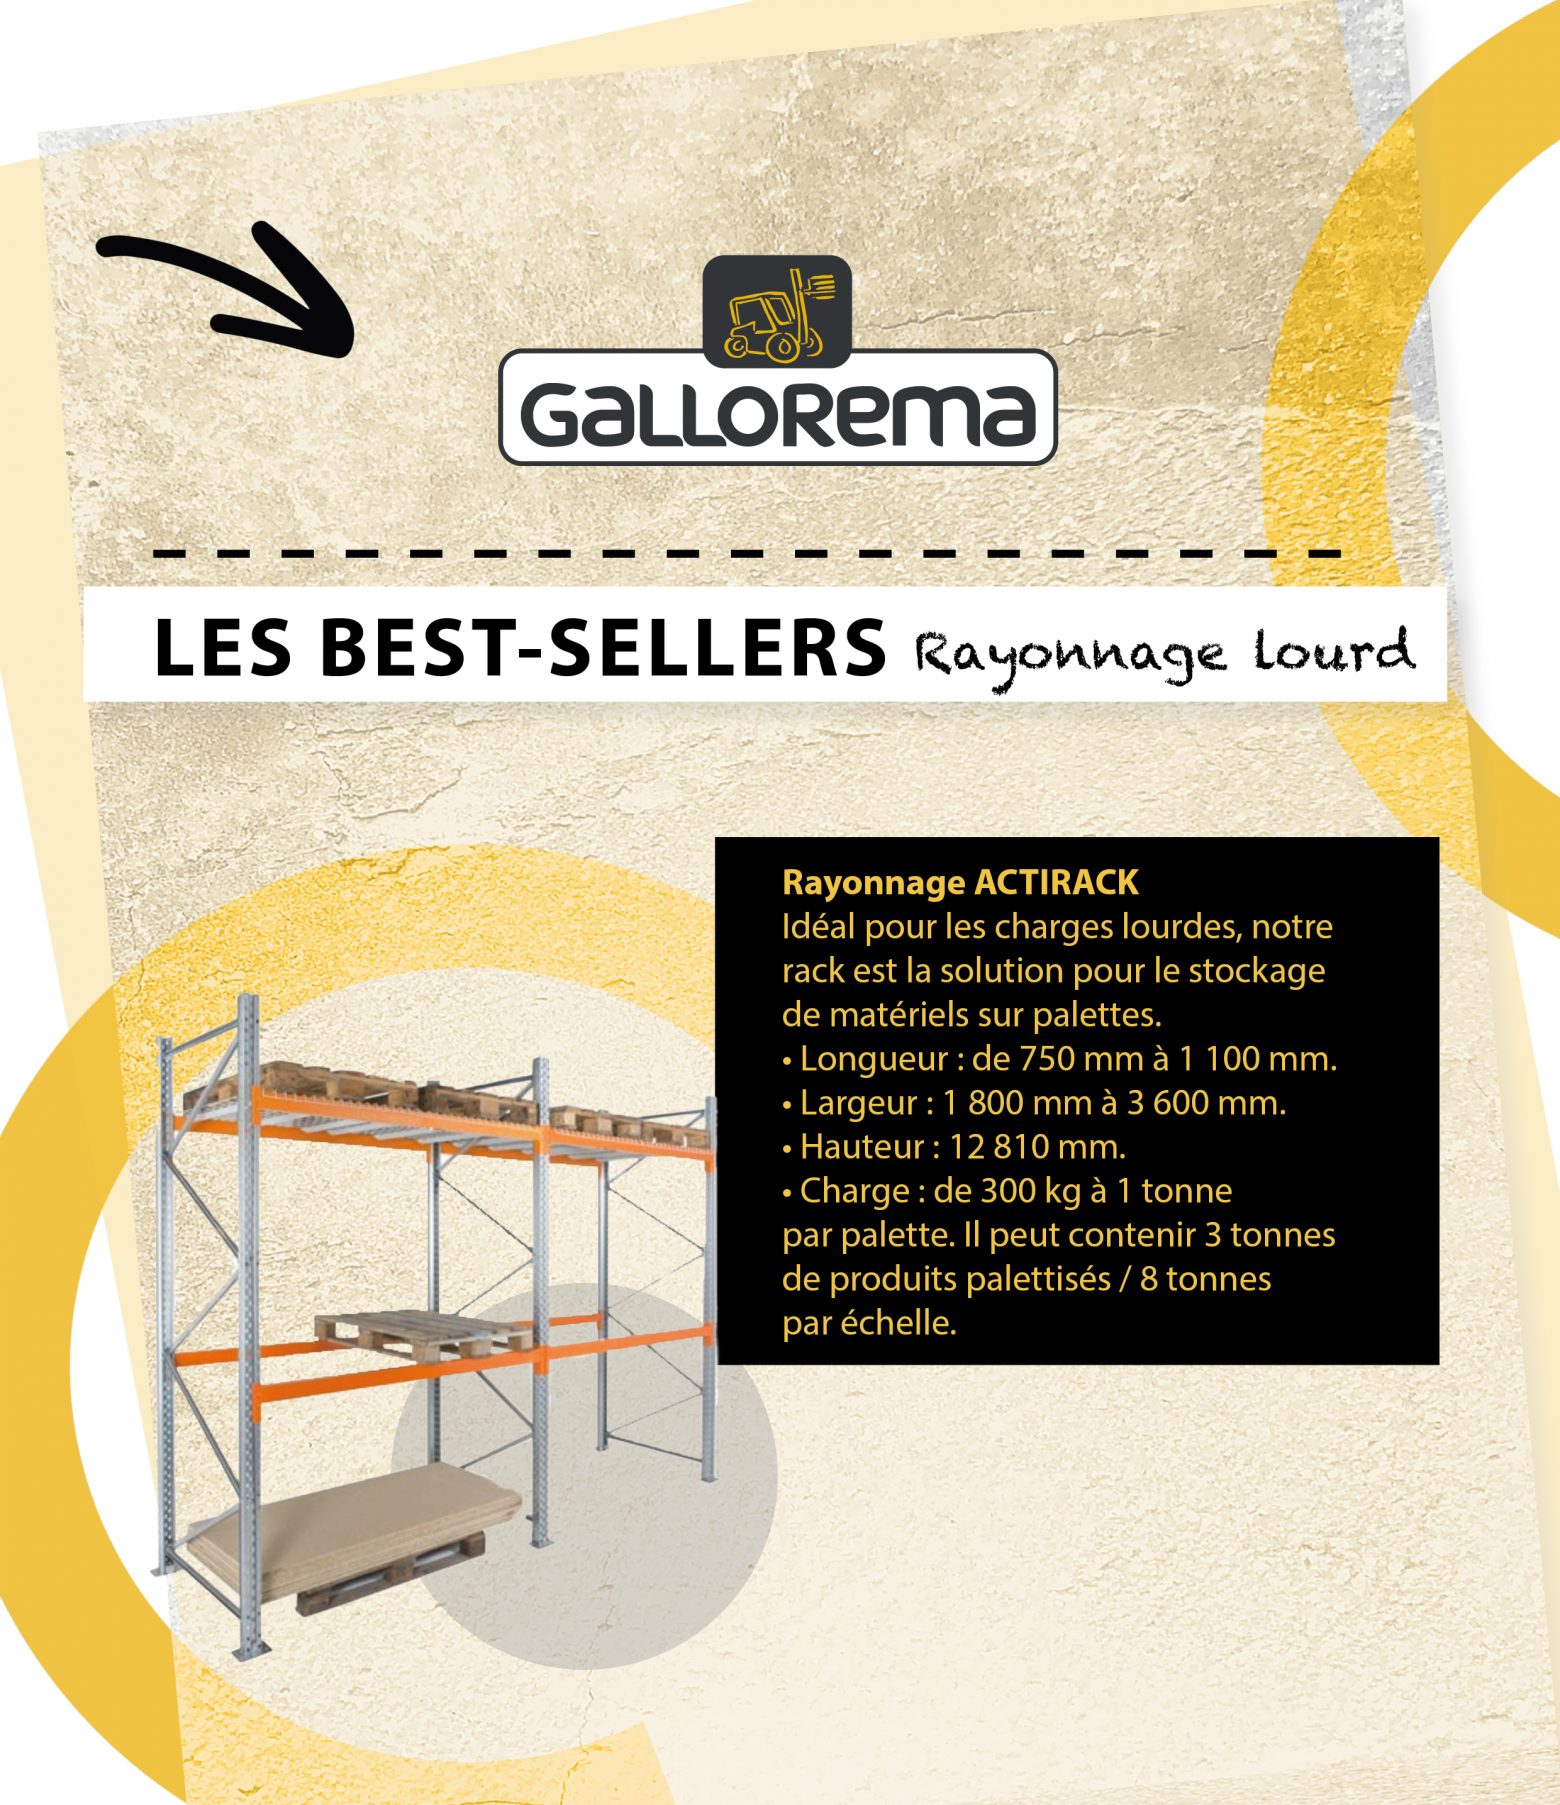 Gallorema best-seller rayonnage lourd Actirack